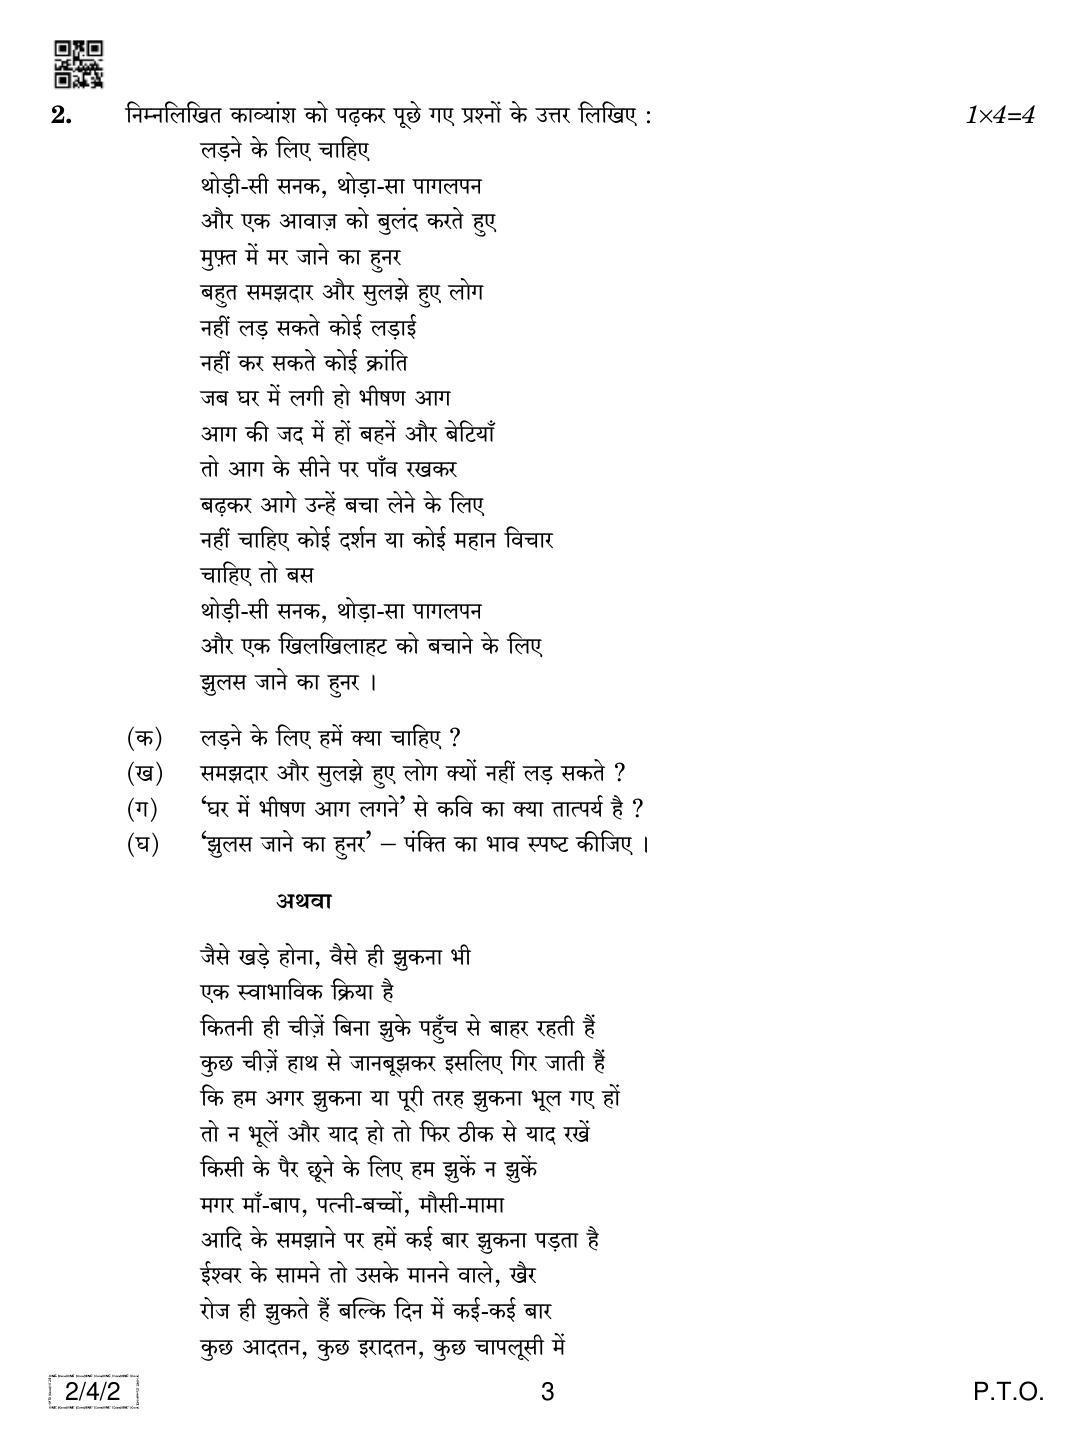 CBSE Class 12 2-4-2 Hindi Core 2019 Question Paper - Page 3